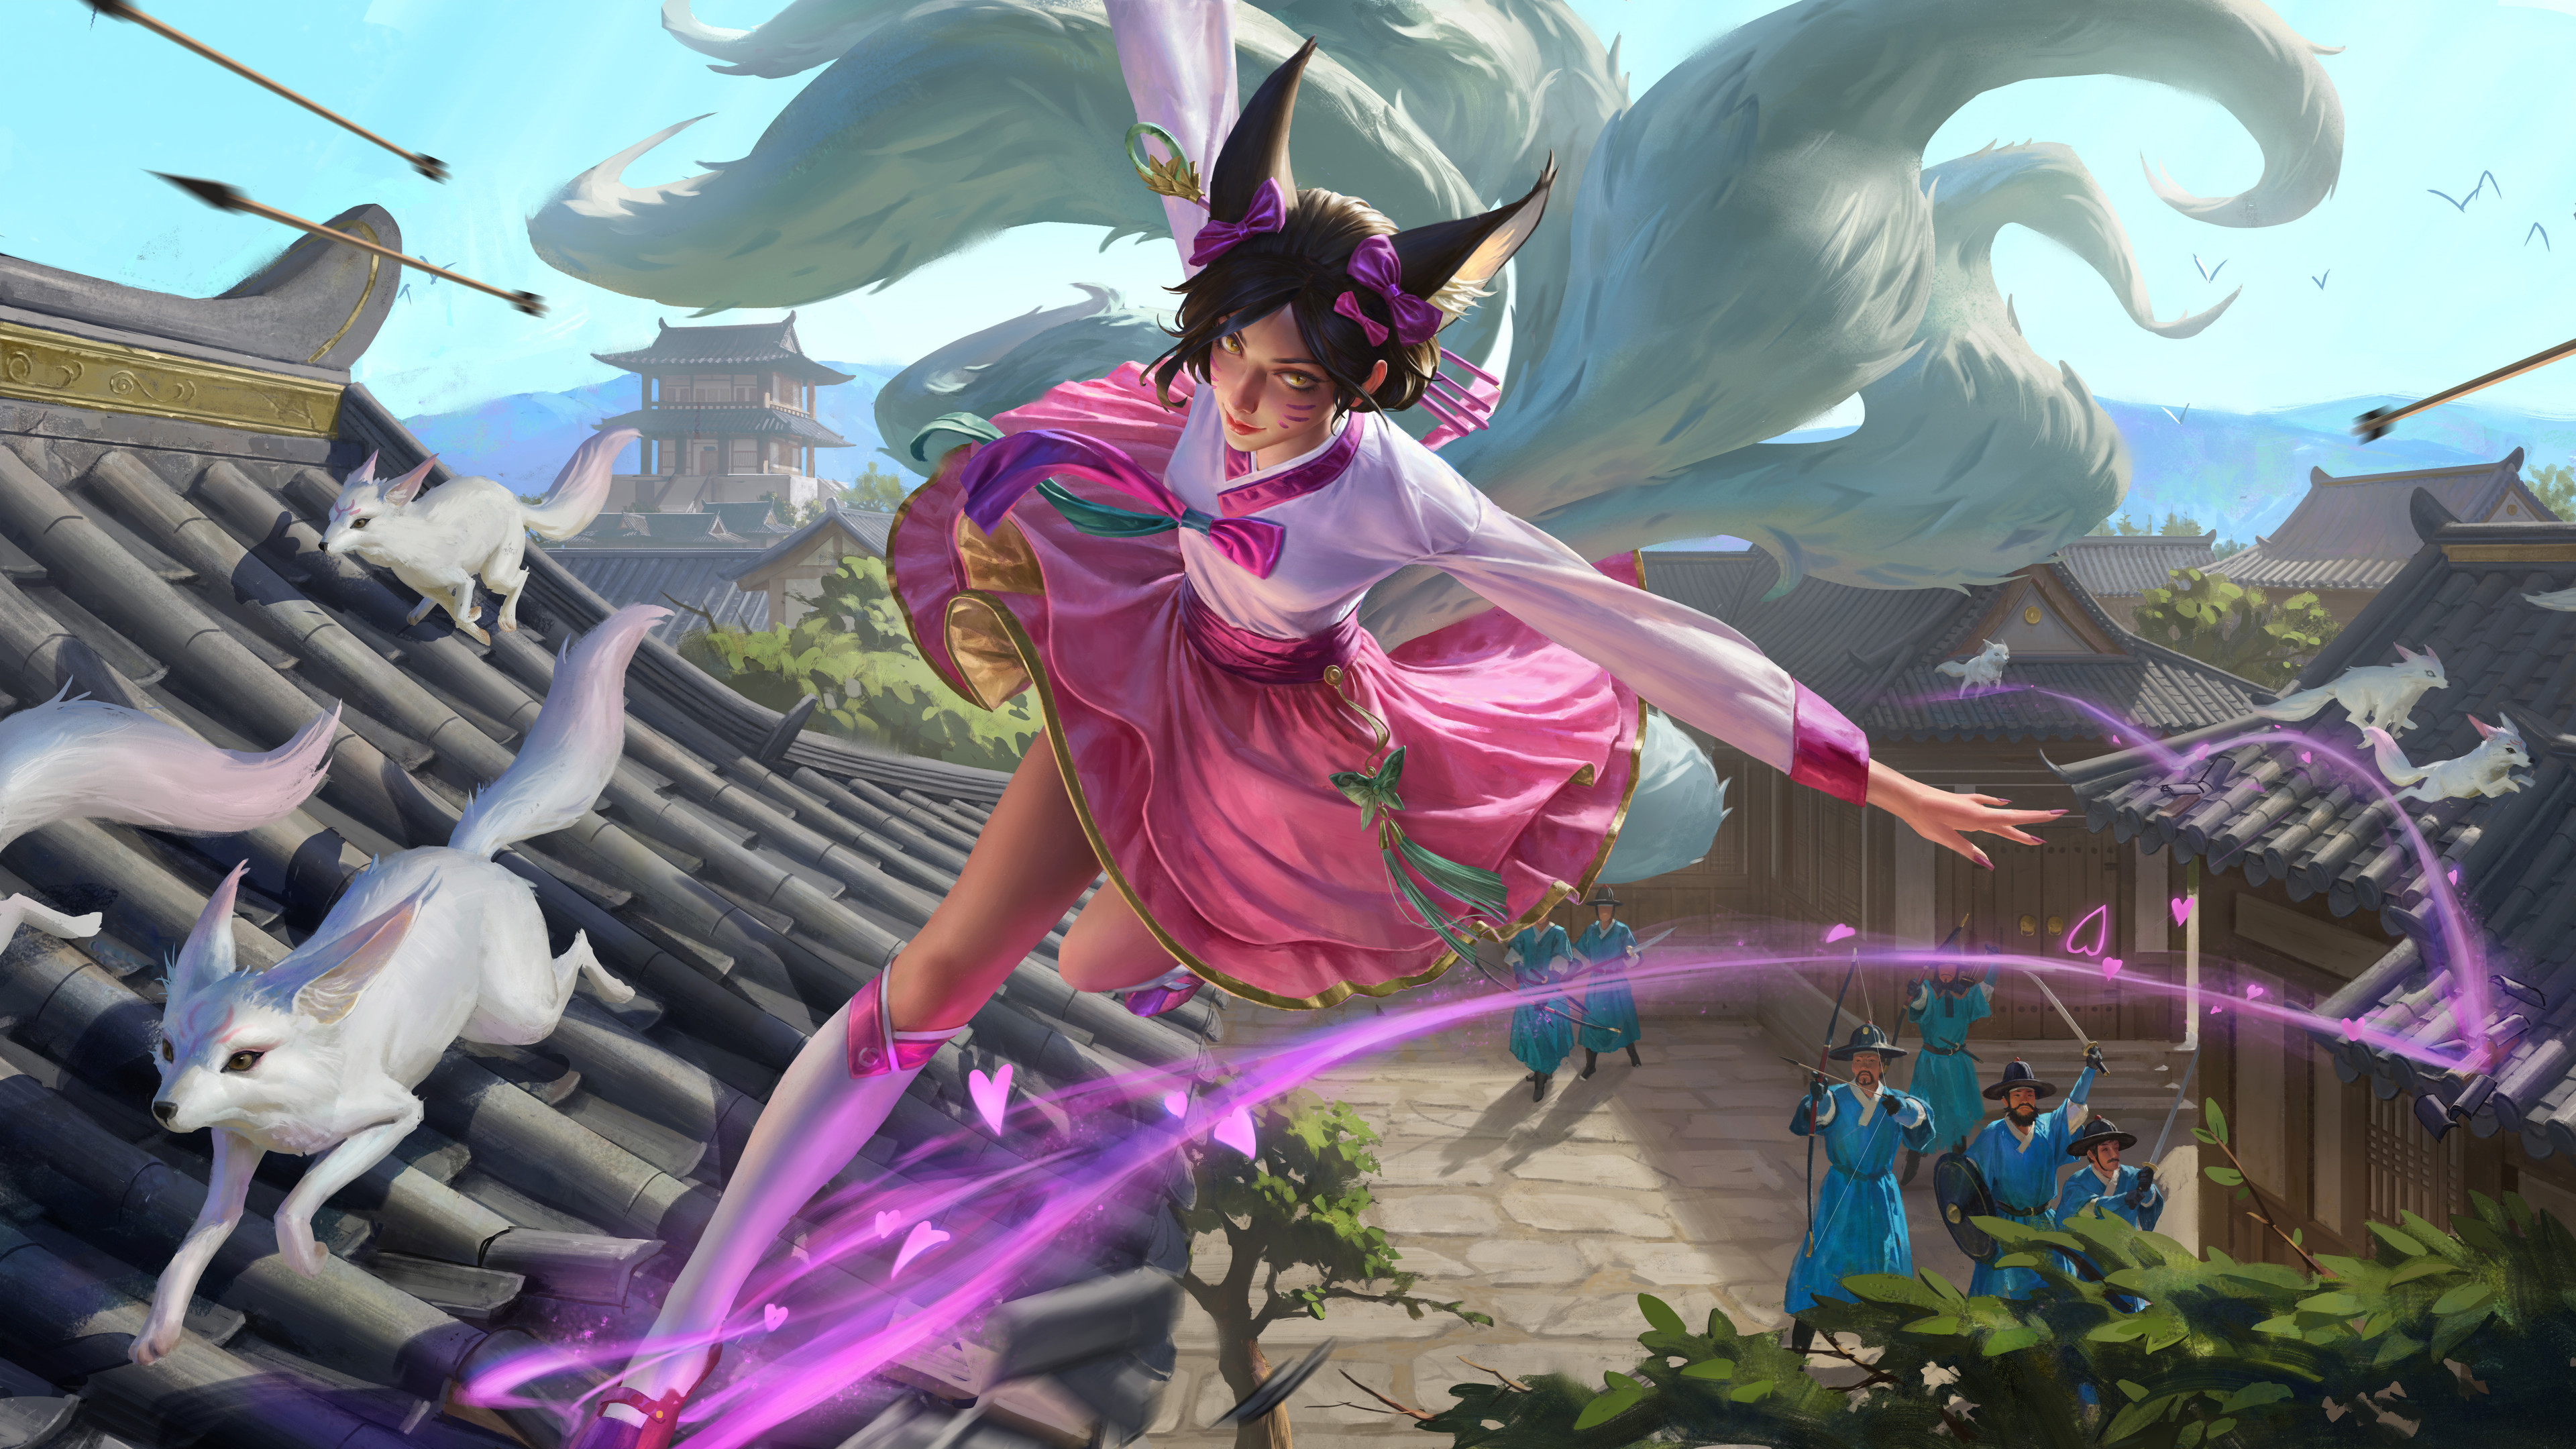 Yuhong Ding Drawing League Of Legends Ahri League Of Legends Dark Hair Dress Pink Clothing Running F 3840x2160